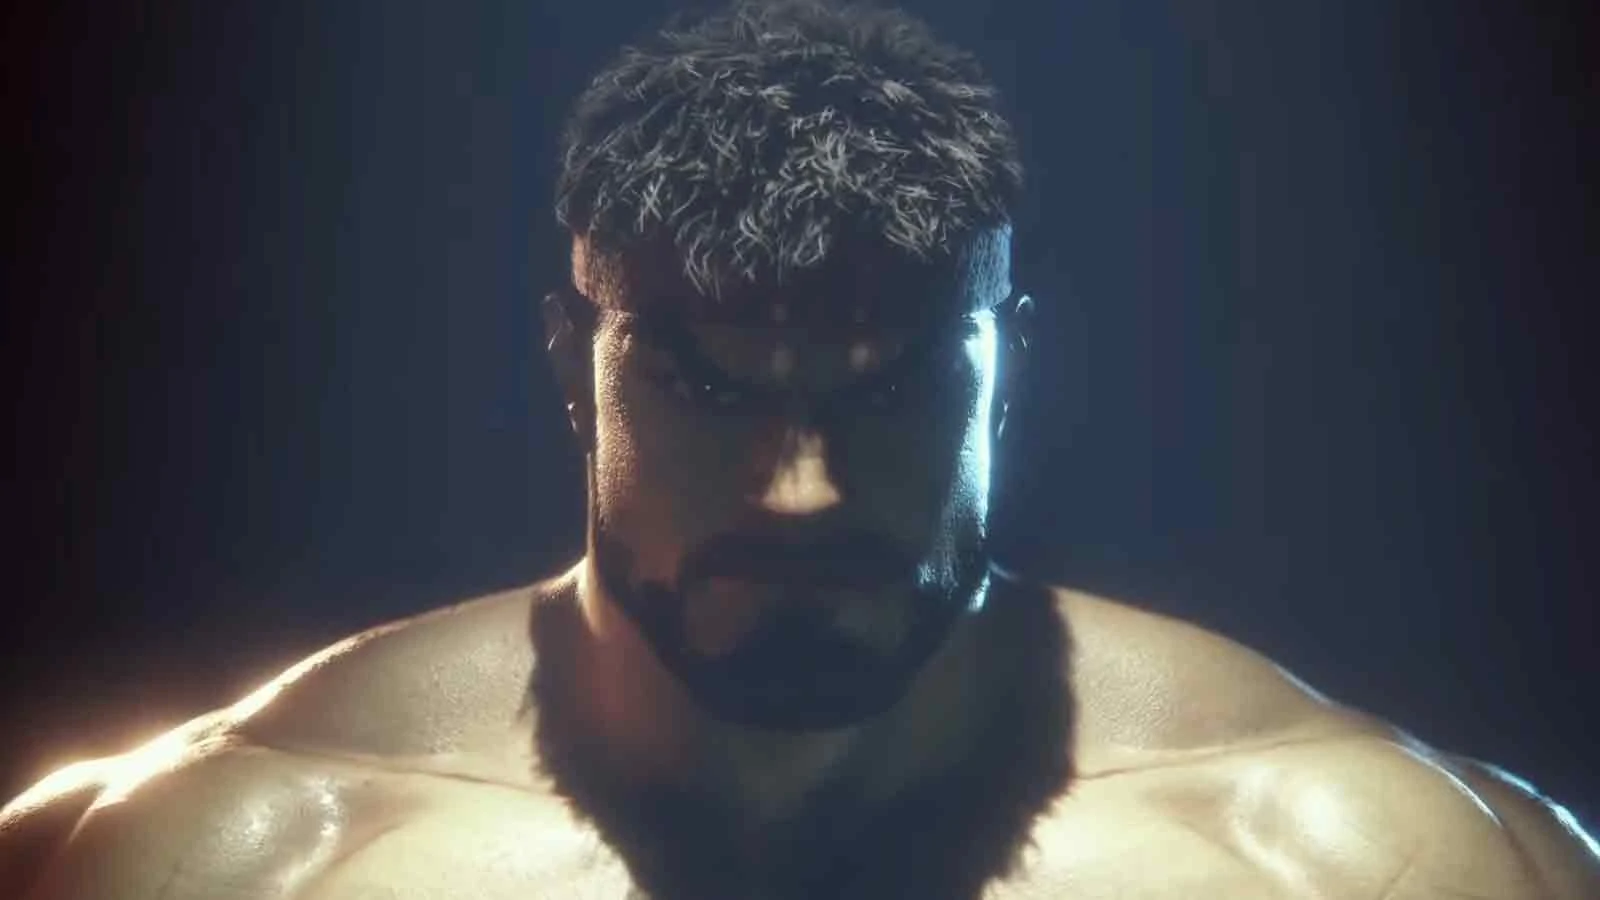 Bearded Ryu for Street Fighter 5  Ryu street fighter, Street fighter, Street  fighter 5